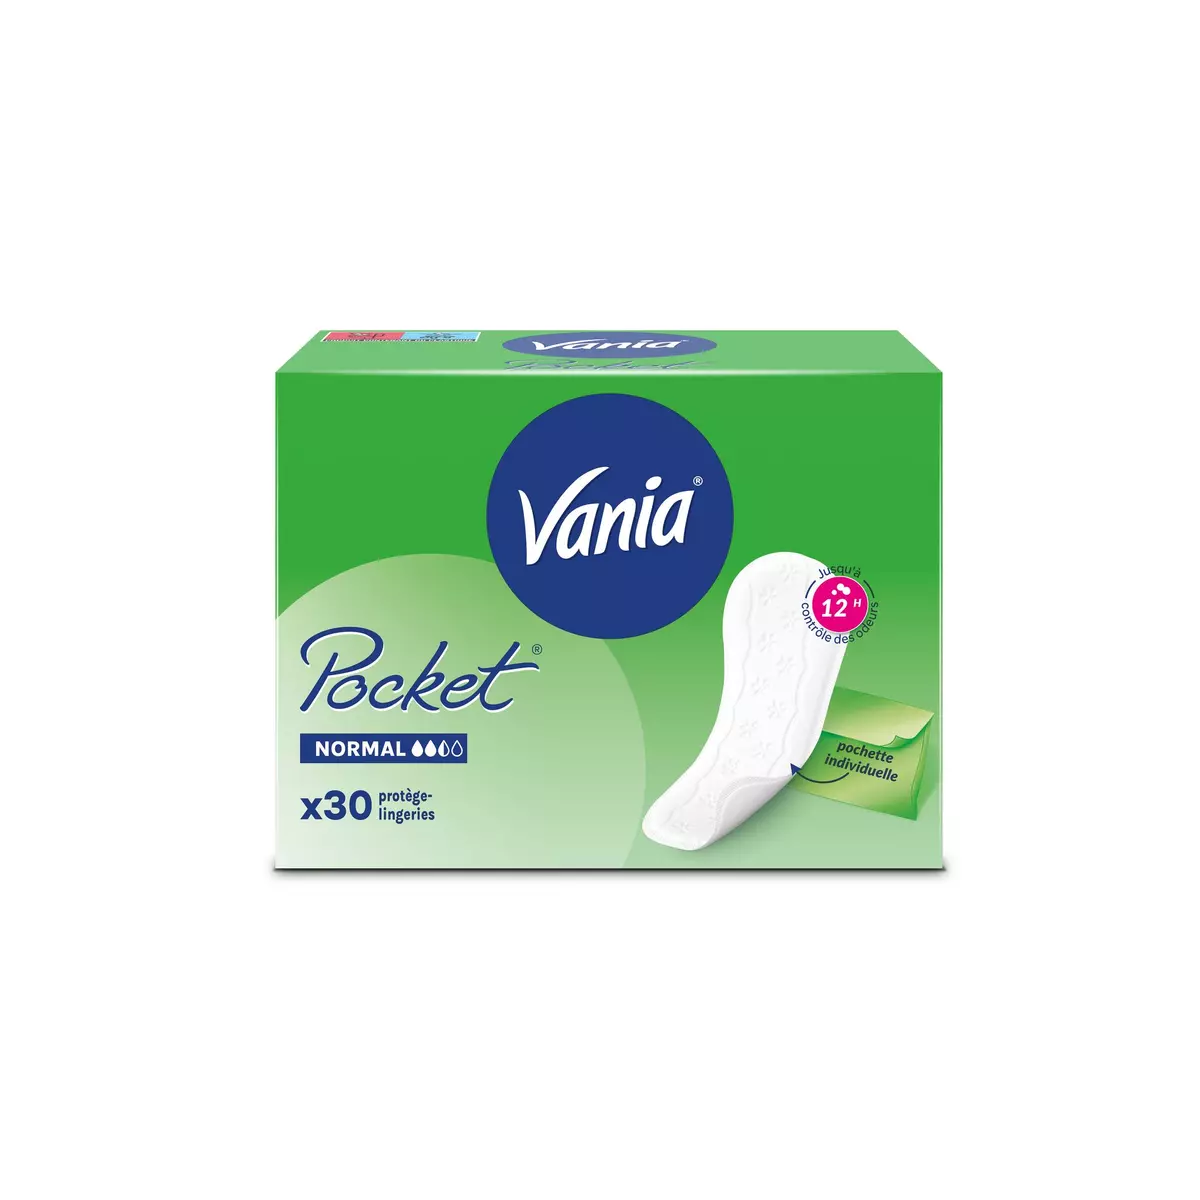 VANIA Pocket Protège-lingeries normal 30 protège-lingeries